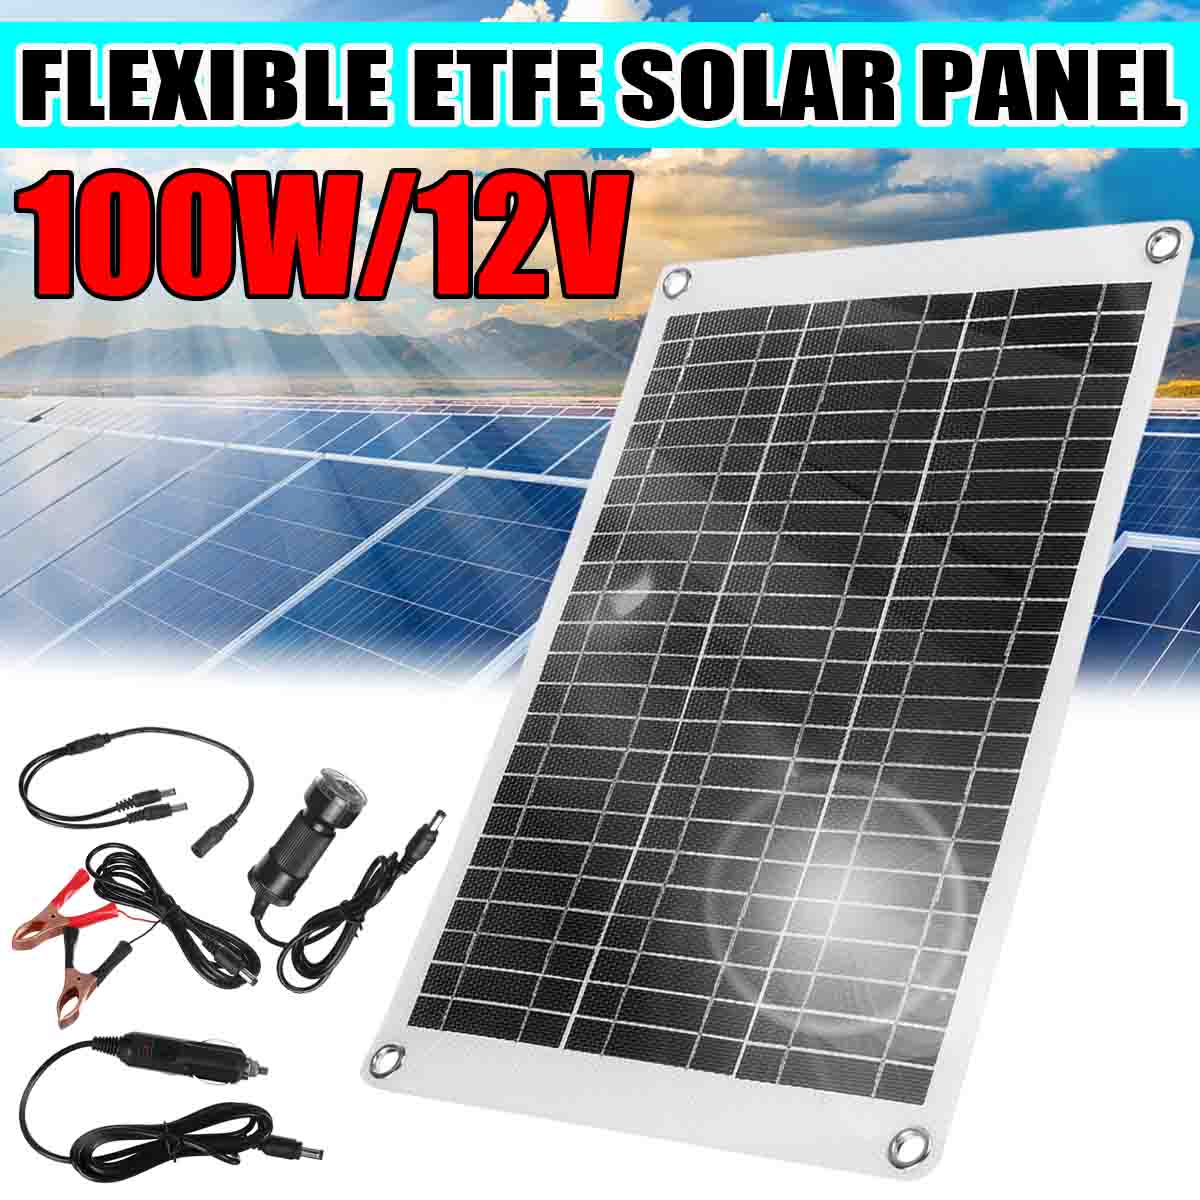 19€ with Coupon for 100W 12V ETFE Solar Panel Kit Phone Car - EU 🇪🇺 - BANGGOOD